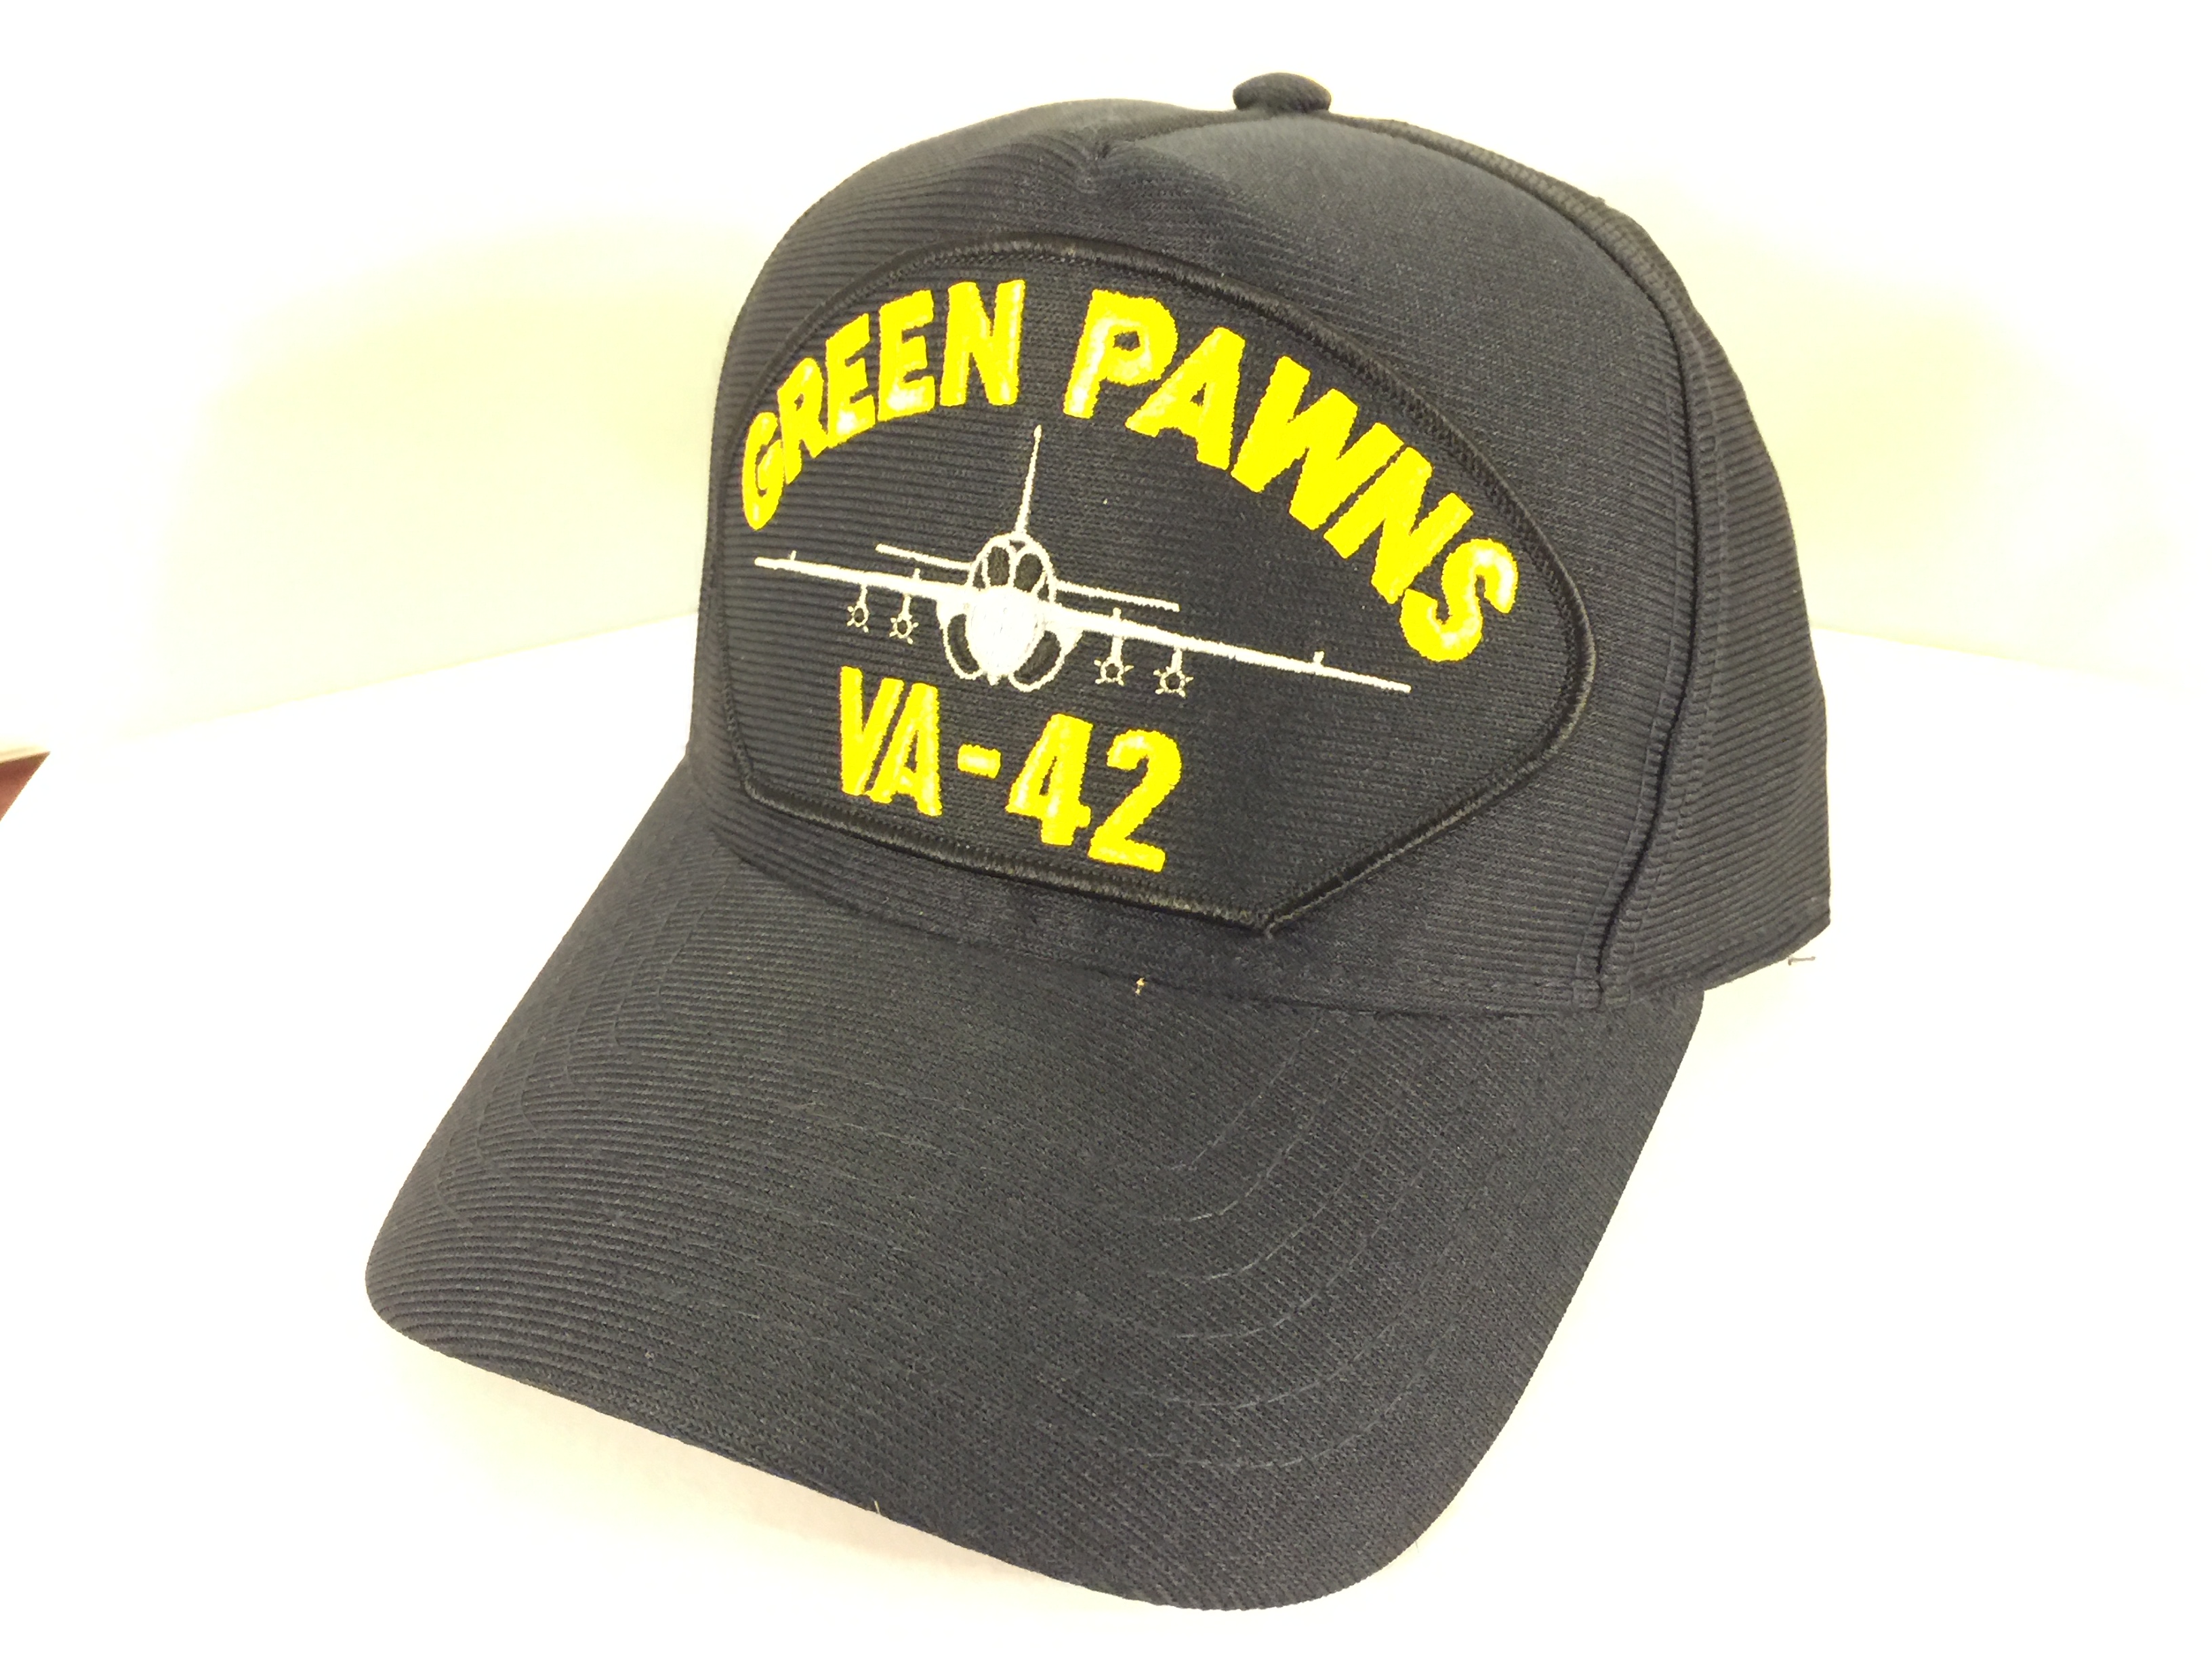 VA-42 Green Pawns Squadron Ballcap (A-6)